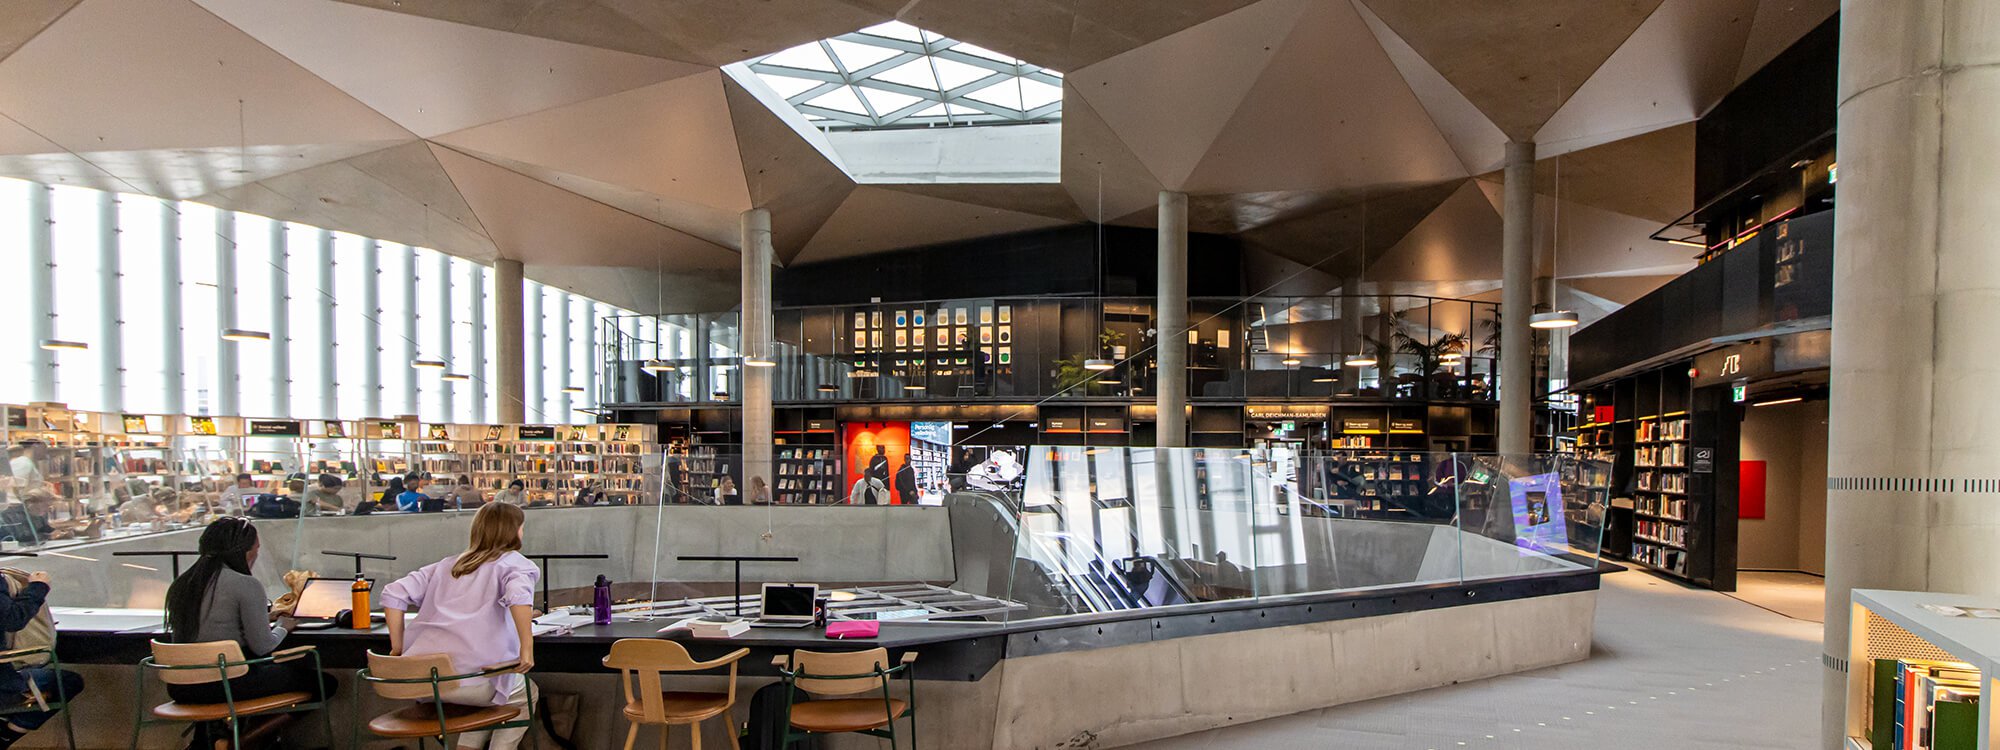 Workation in Norwegen, die Deichmann Bibliothek in Oslo innen